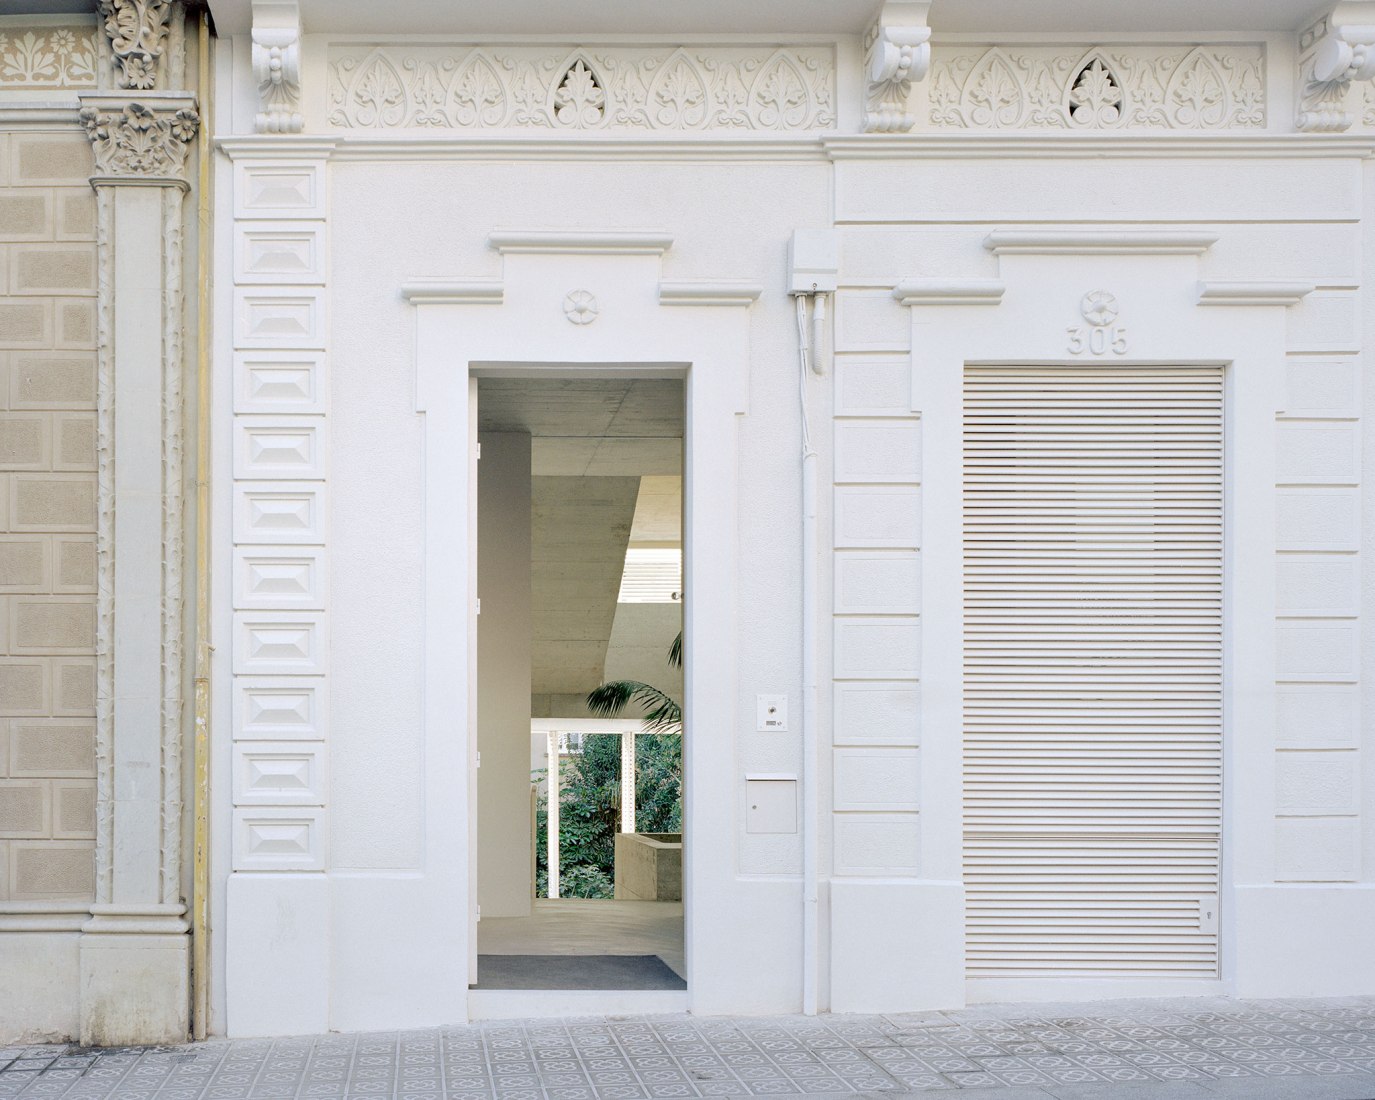 Casa Verdi por Arquitectura-G. Fotografía de Maxime Delvaux